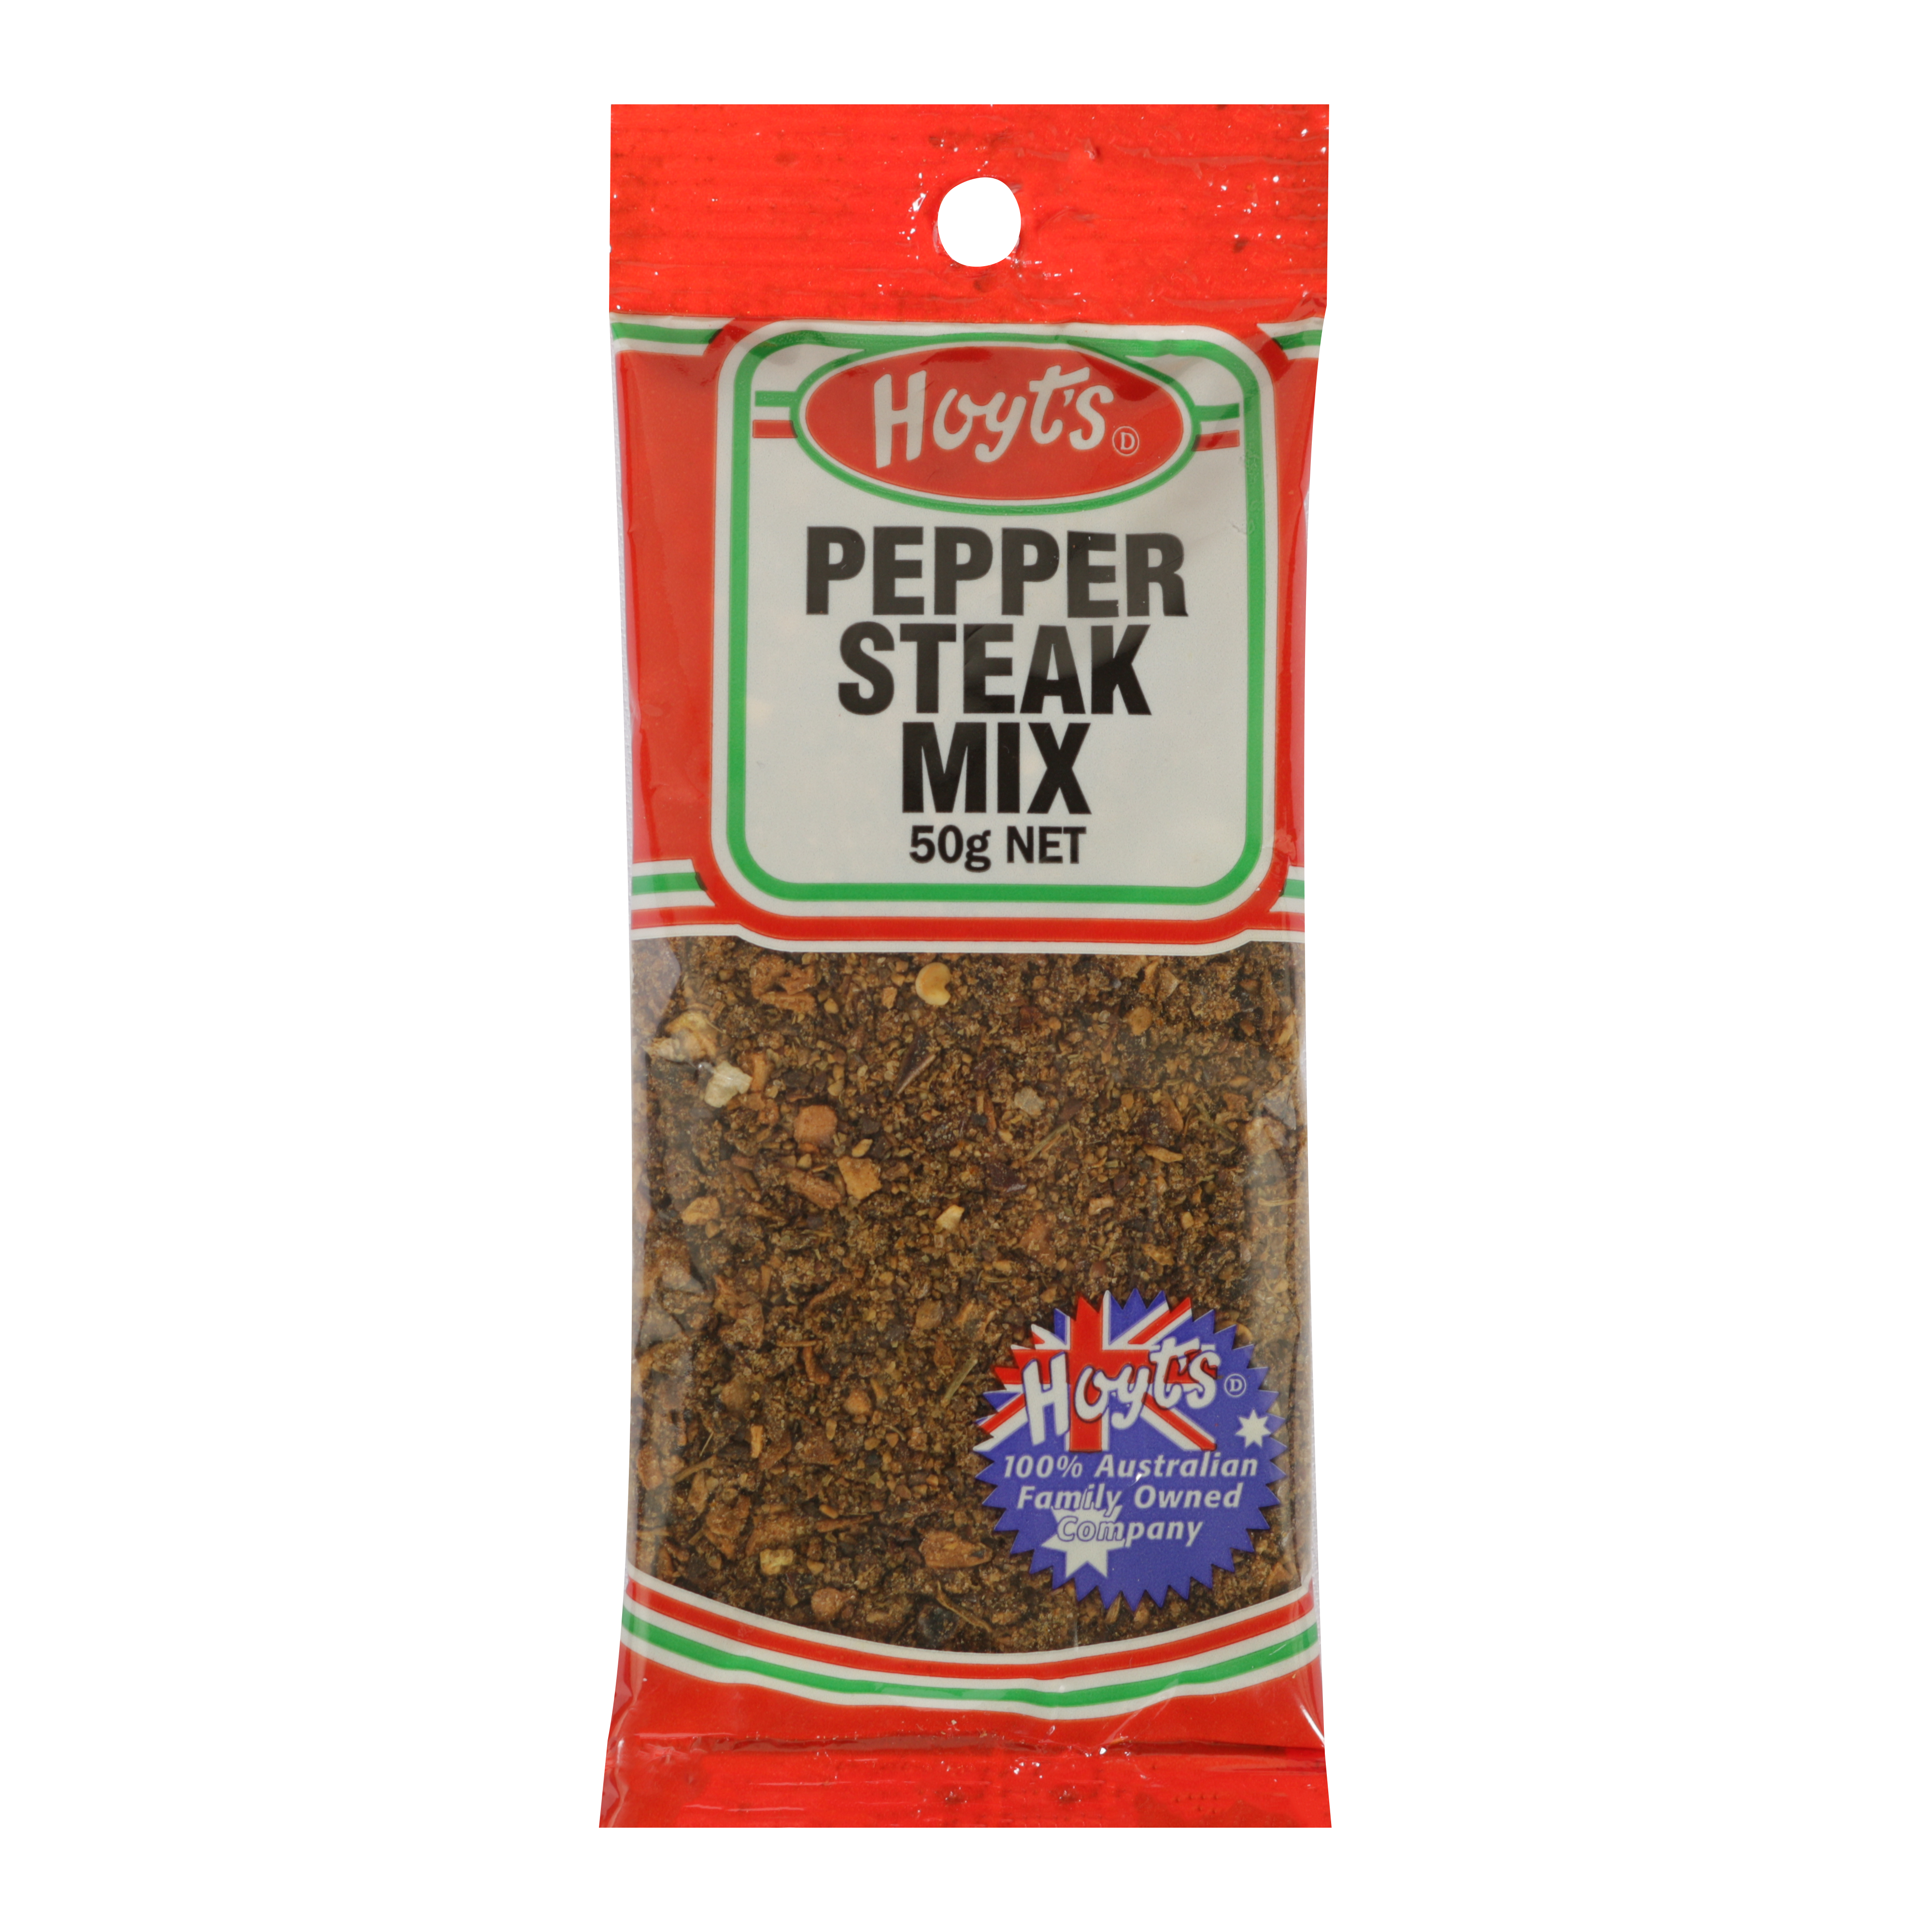 Hoyts Pepper Steak Mix 50g